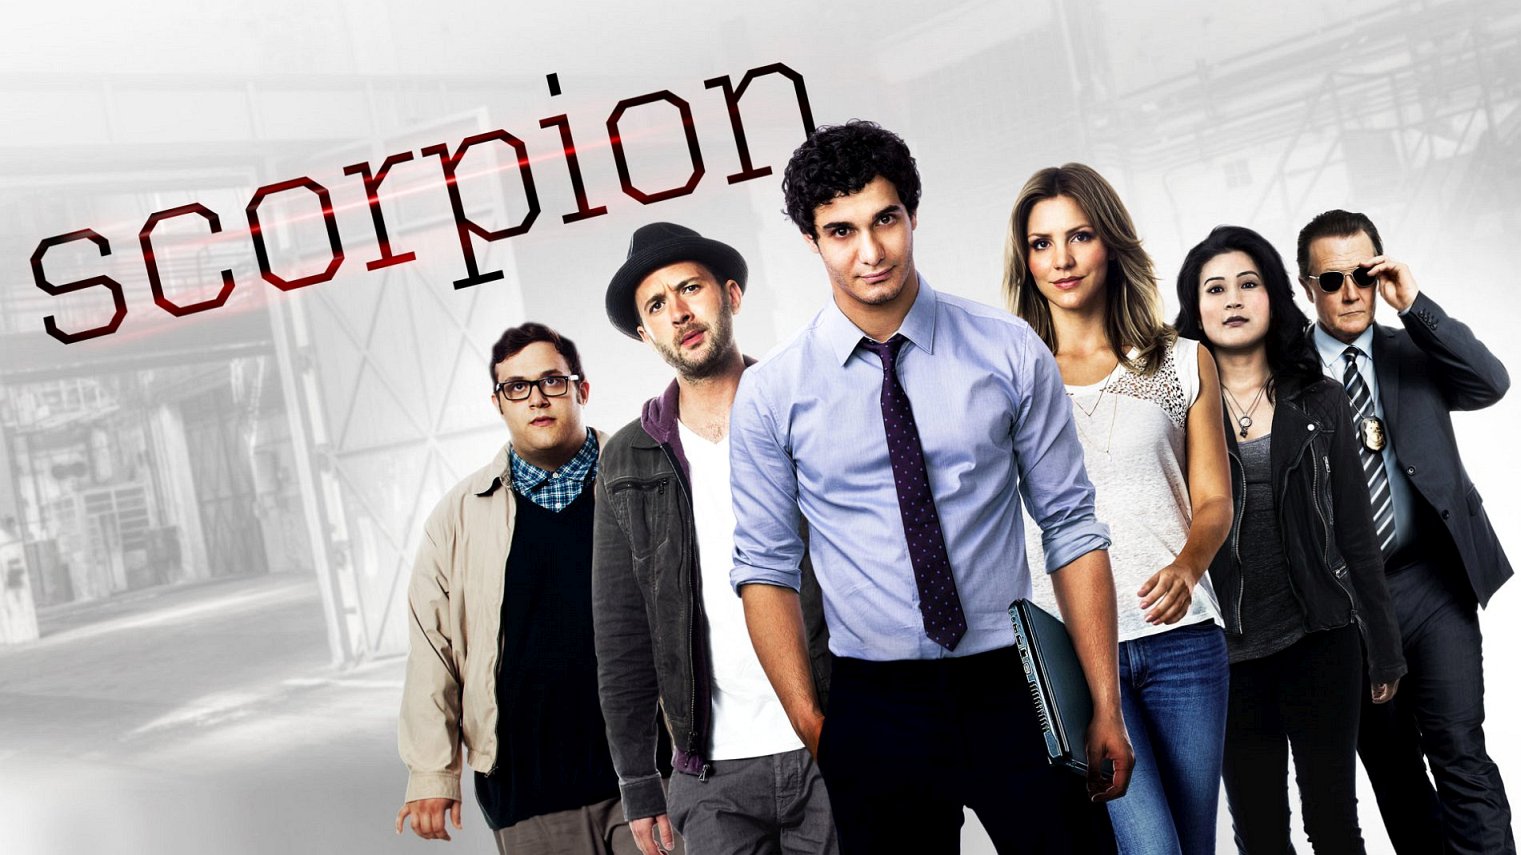 cast of Scorpion season 3